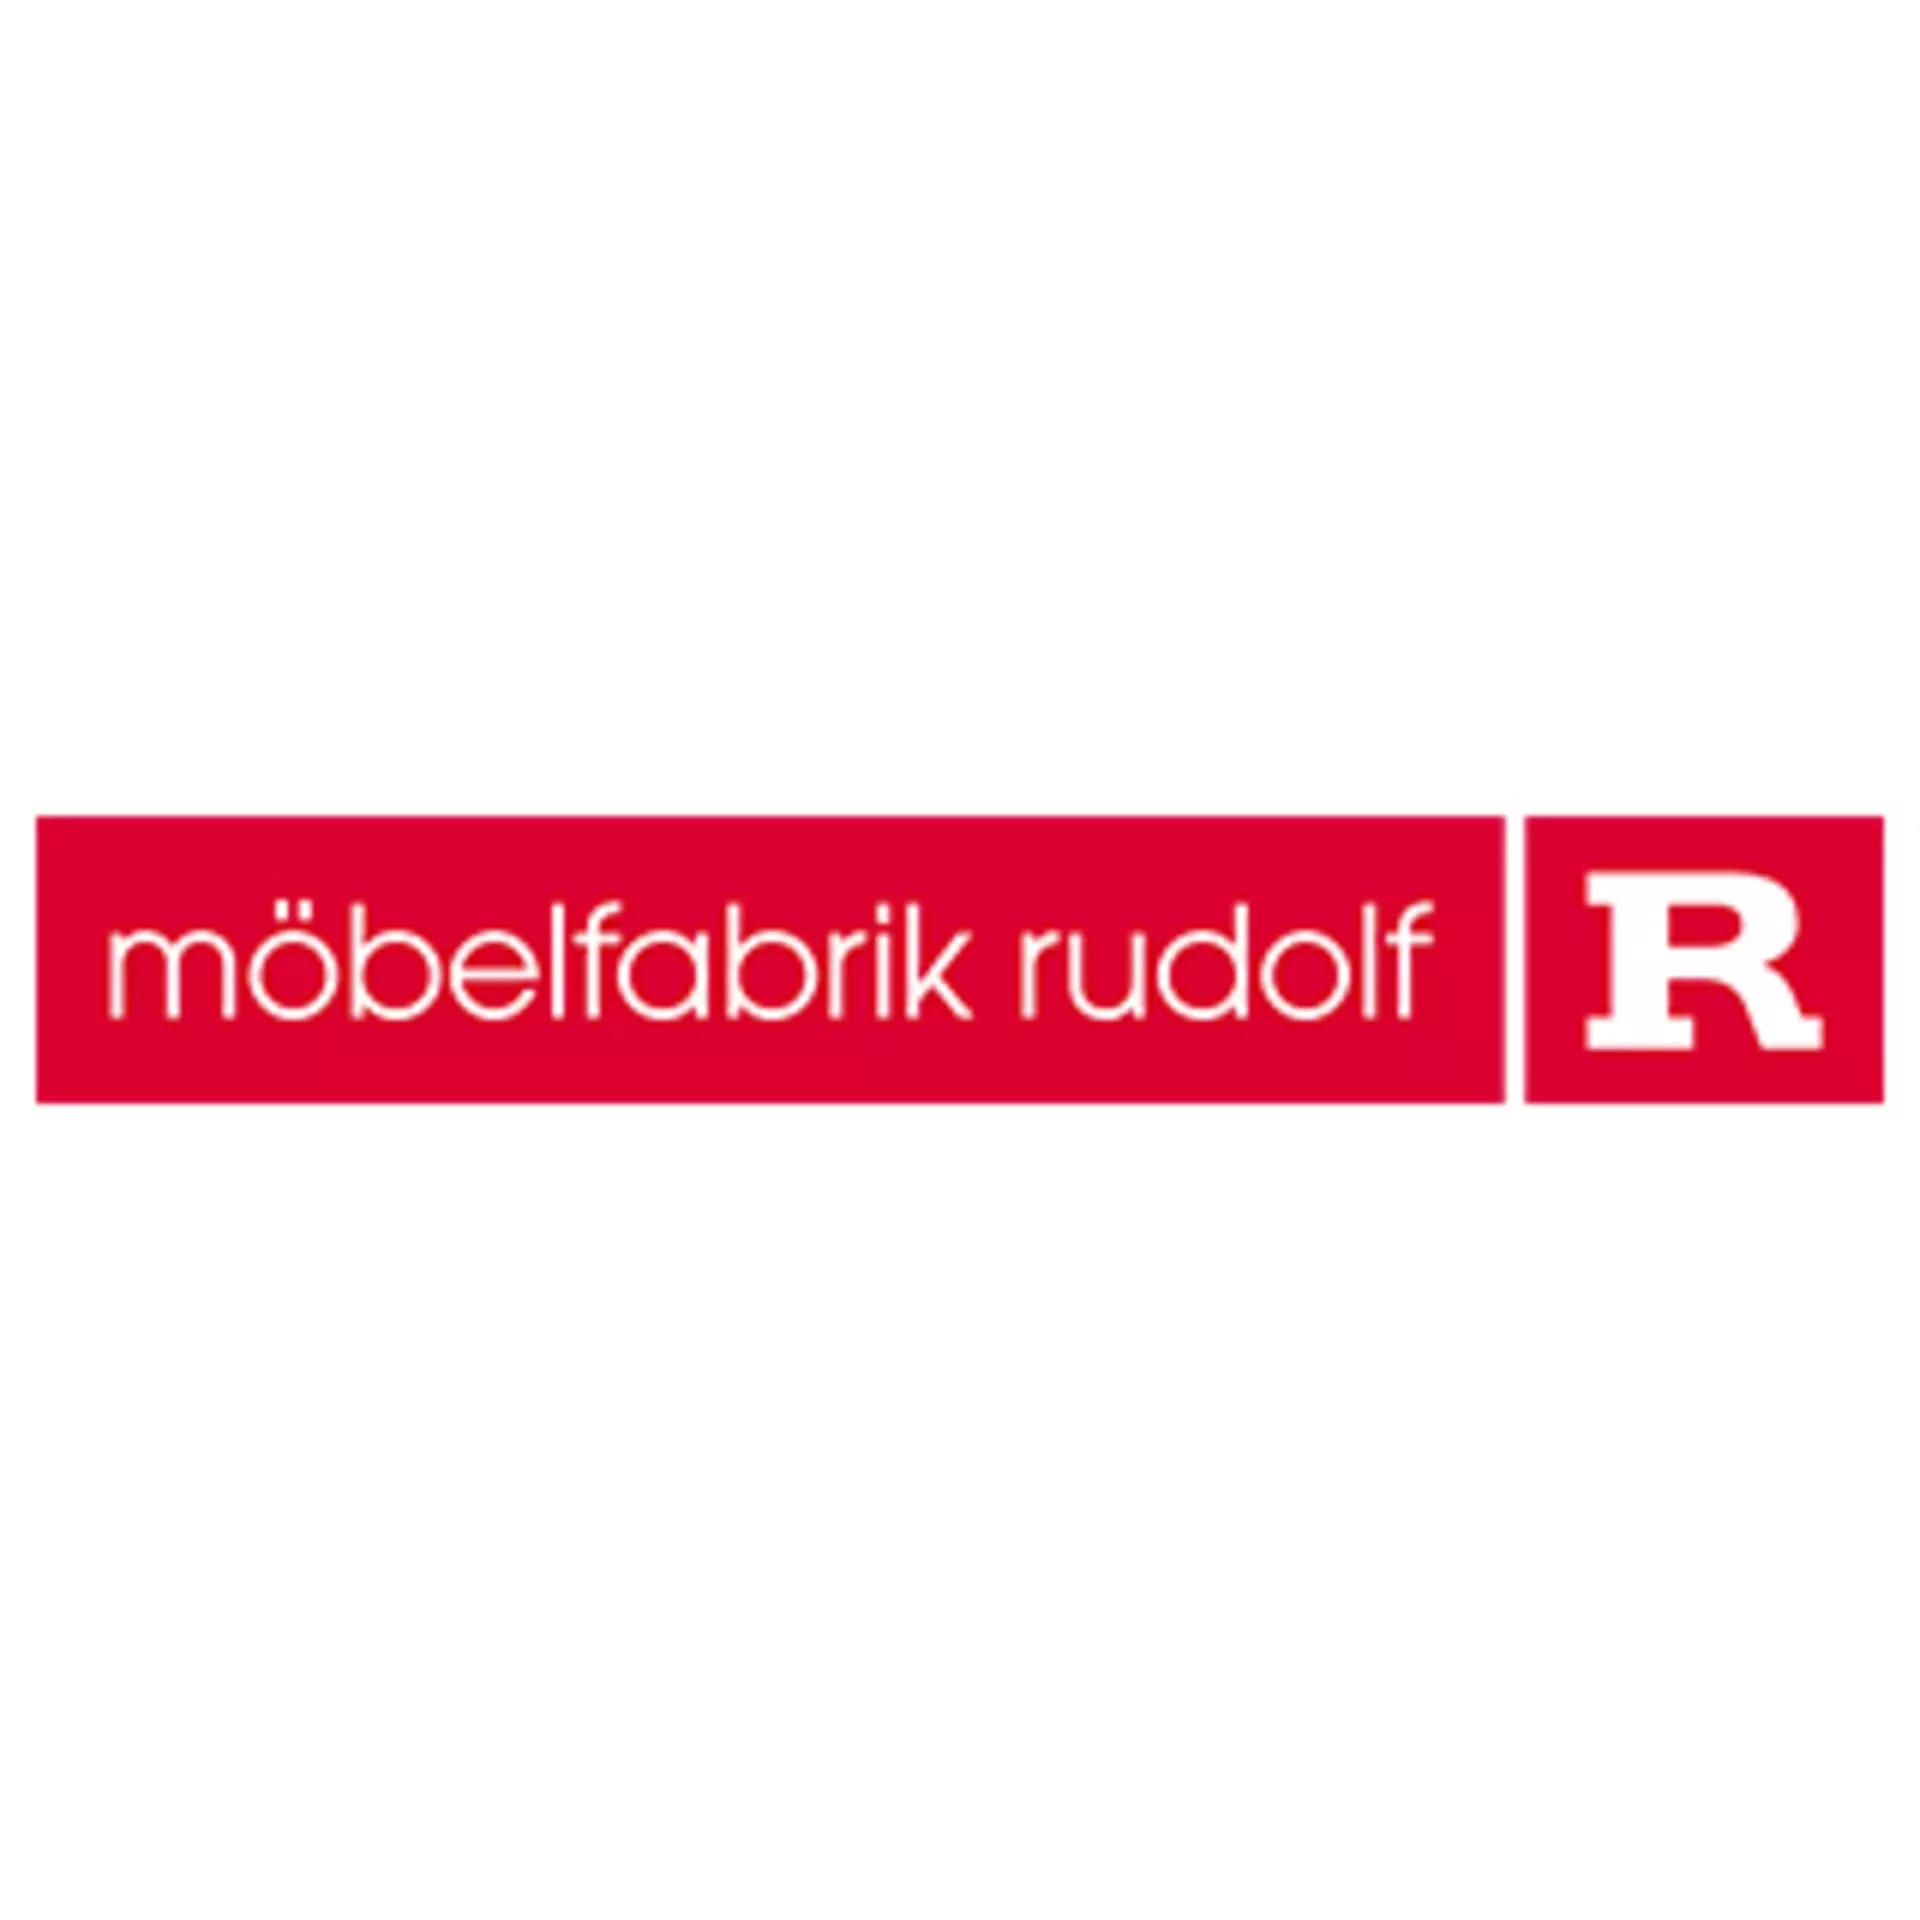 Möbelfabrik Rudolf